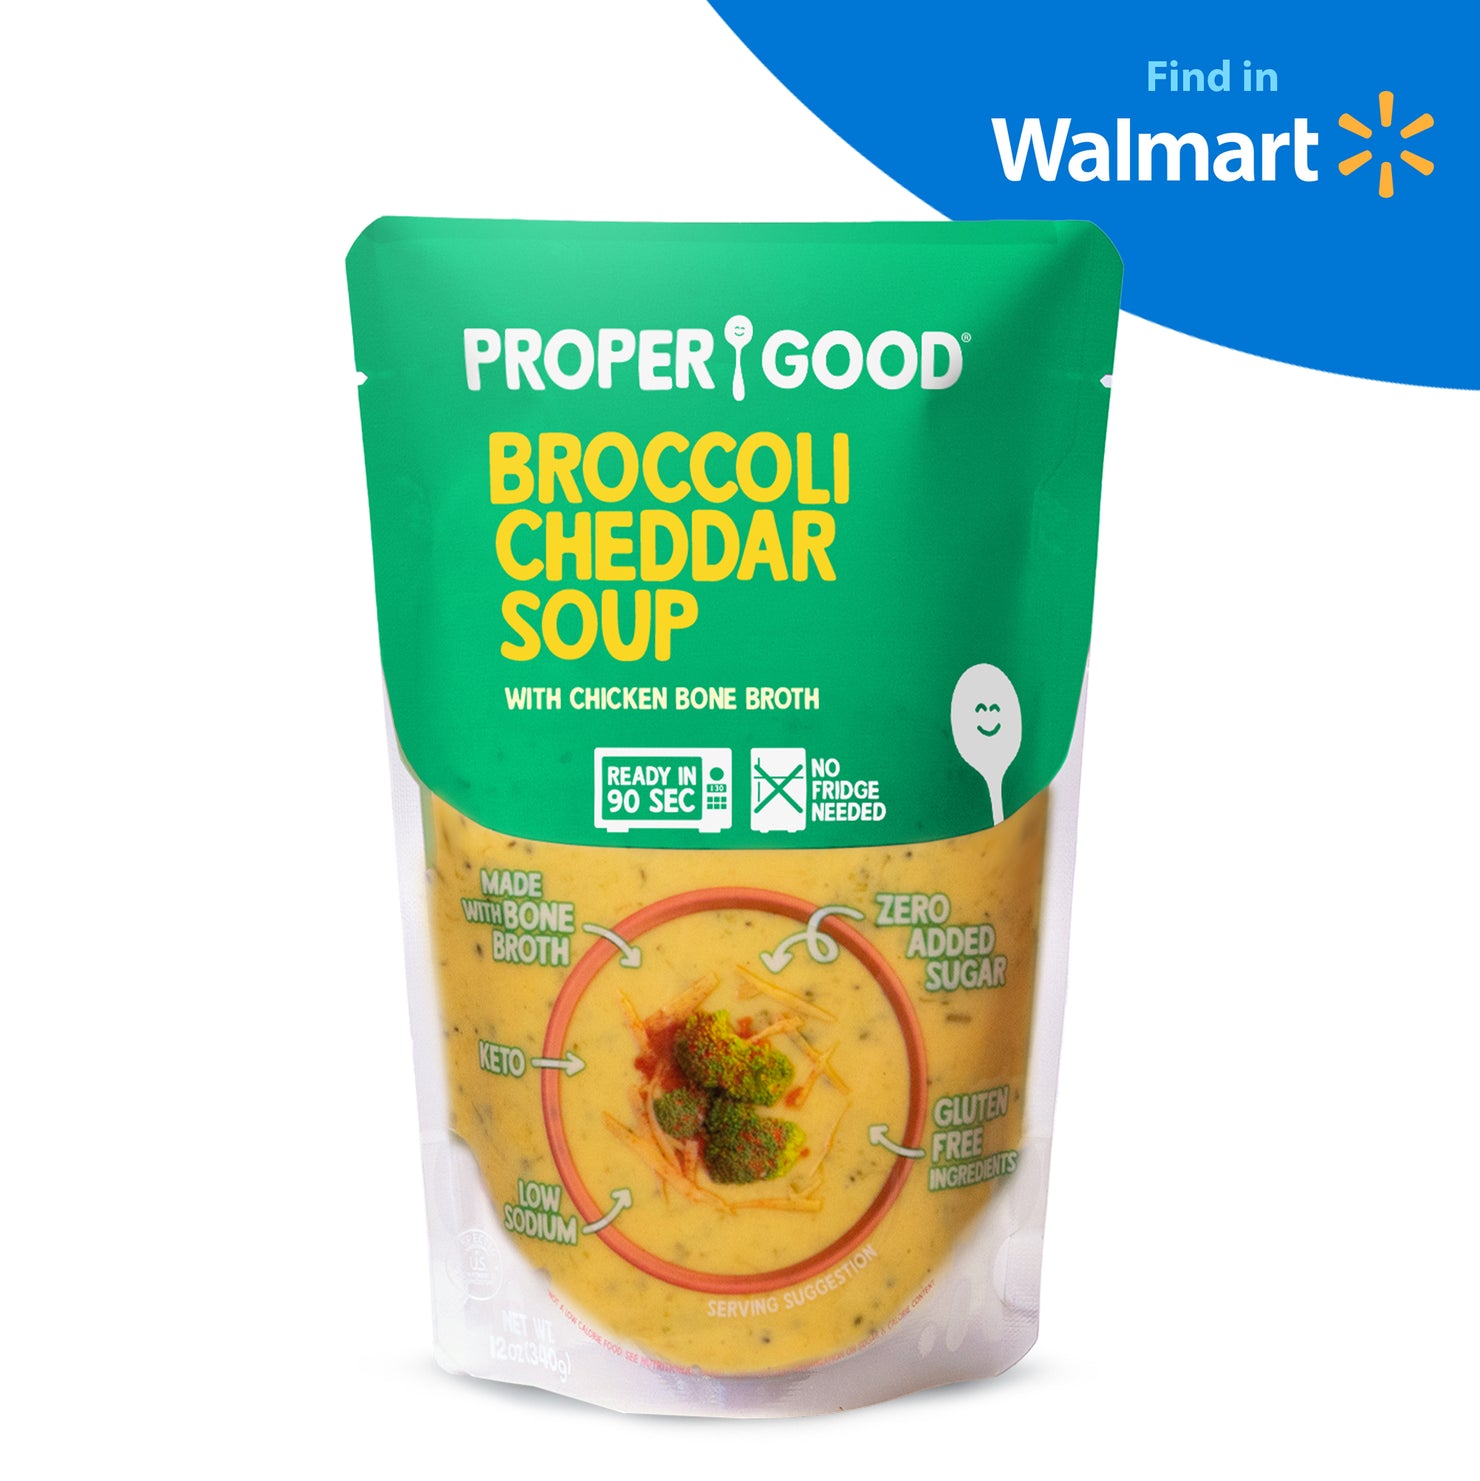 Broccoli Cheddar Soup - Find in Walmart - Eat Proper Good